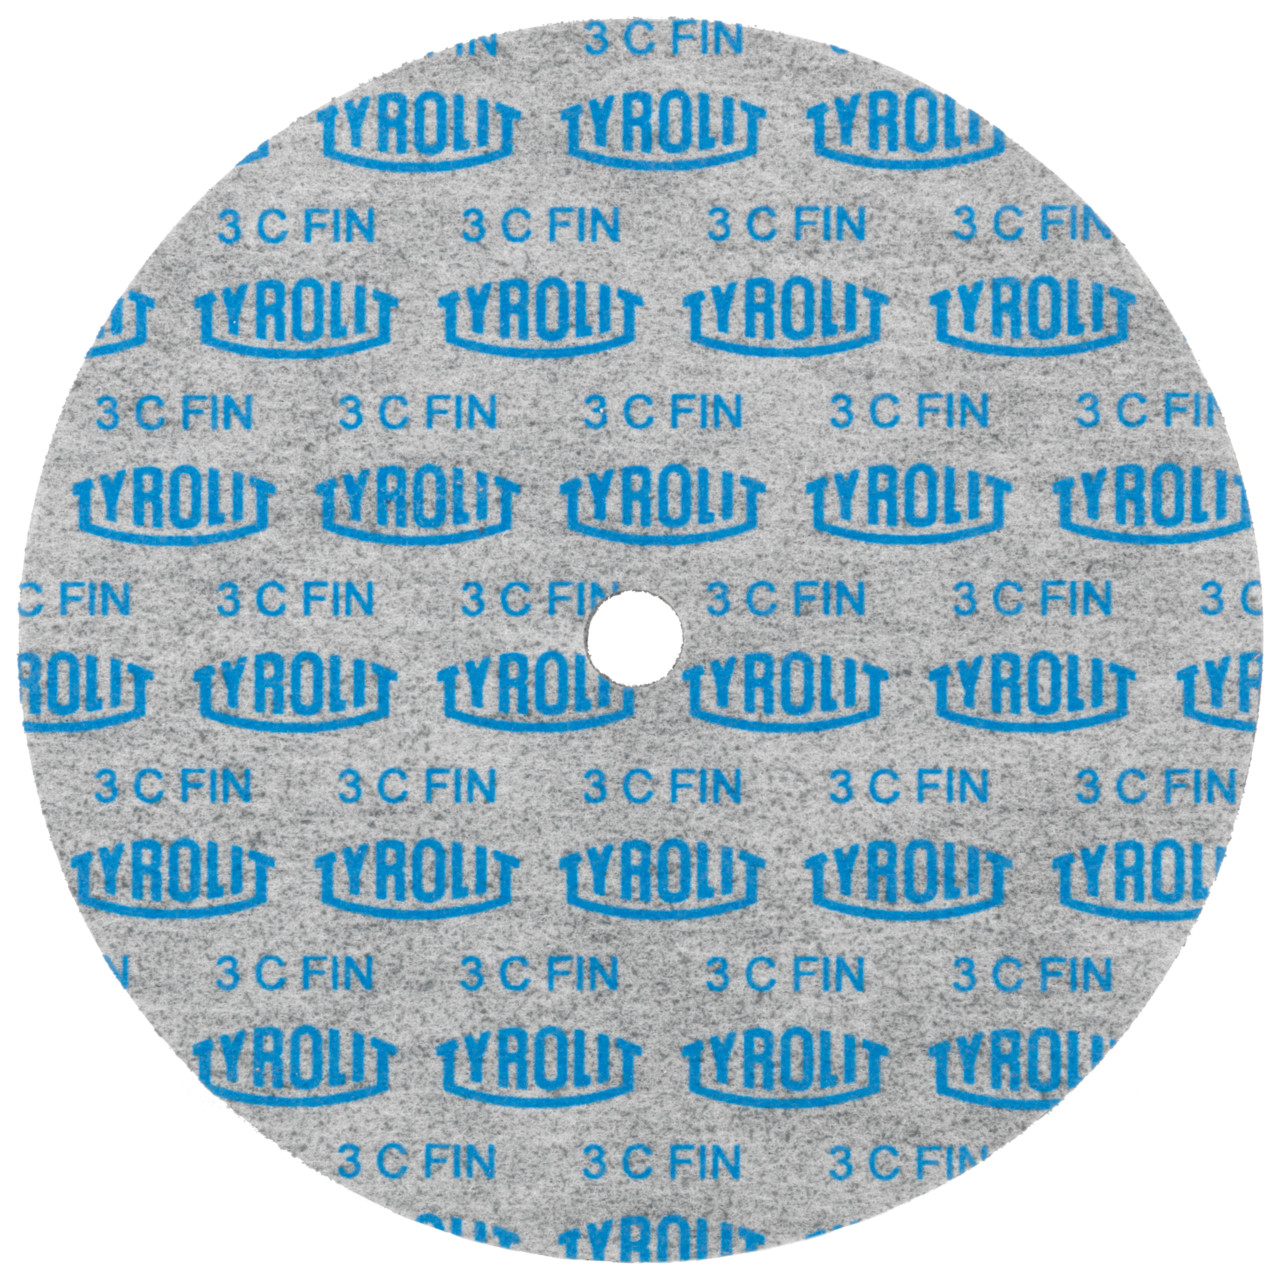 Tyrolit Discos compactos prensados DxDxH 152x25x12,7 Inserto universal, 3 C FEIN, forma: 1, Art. 34190299